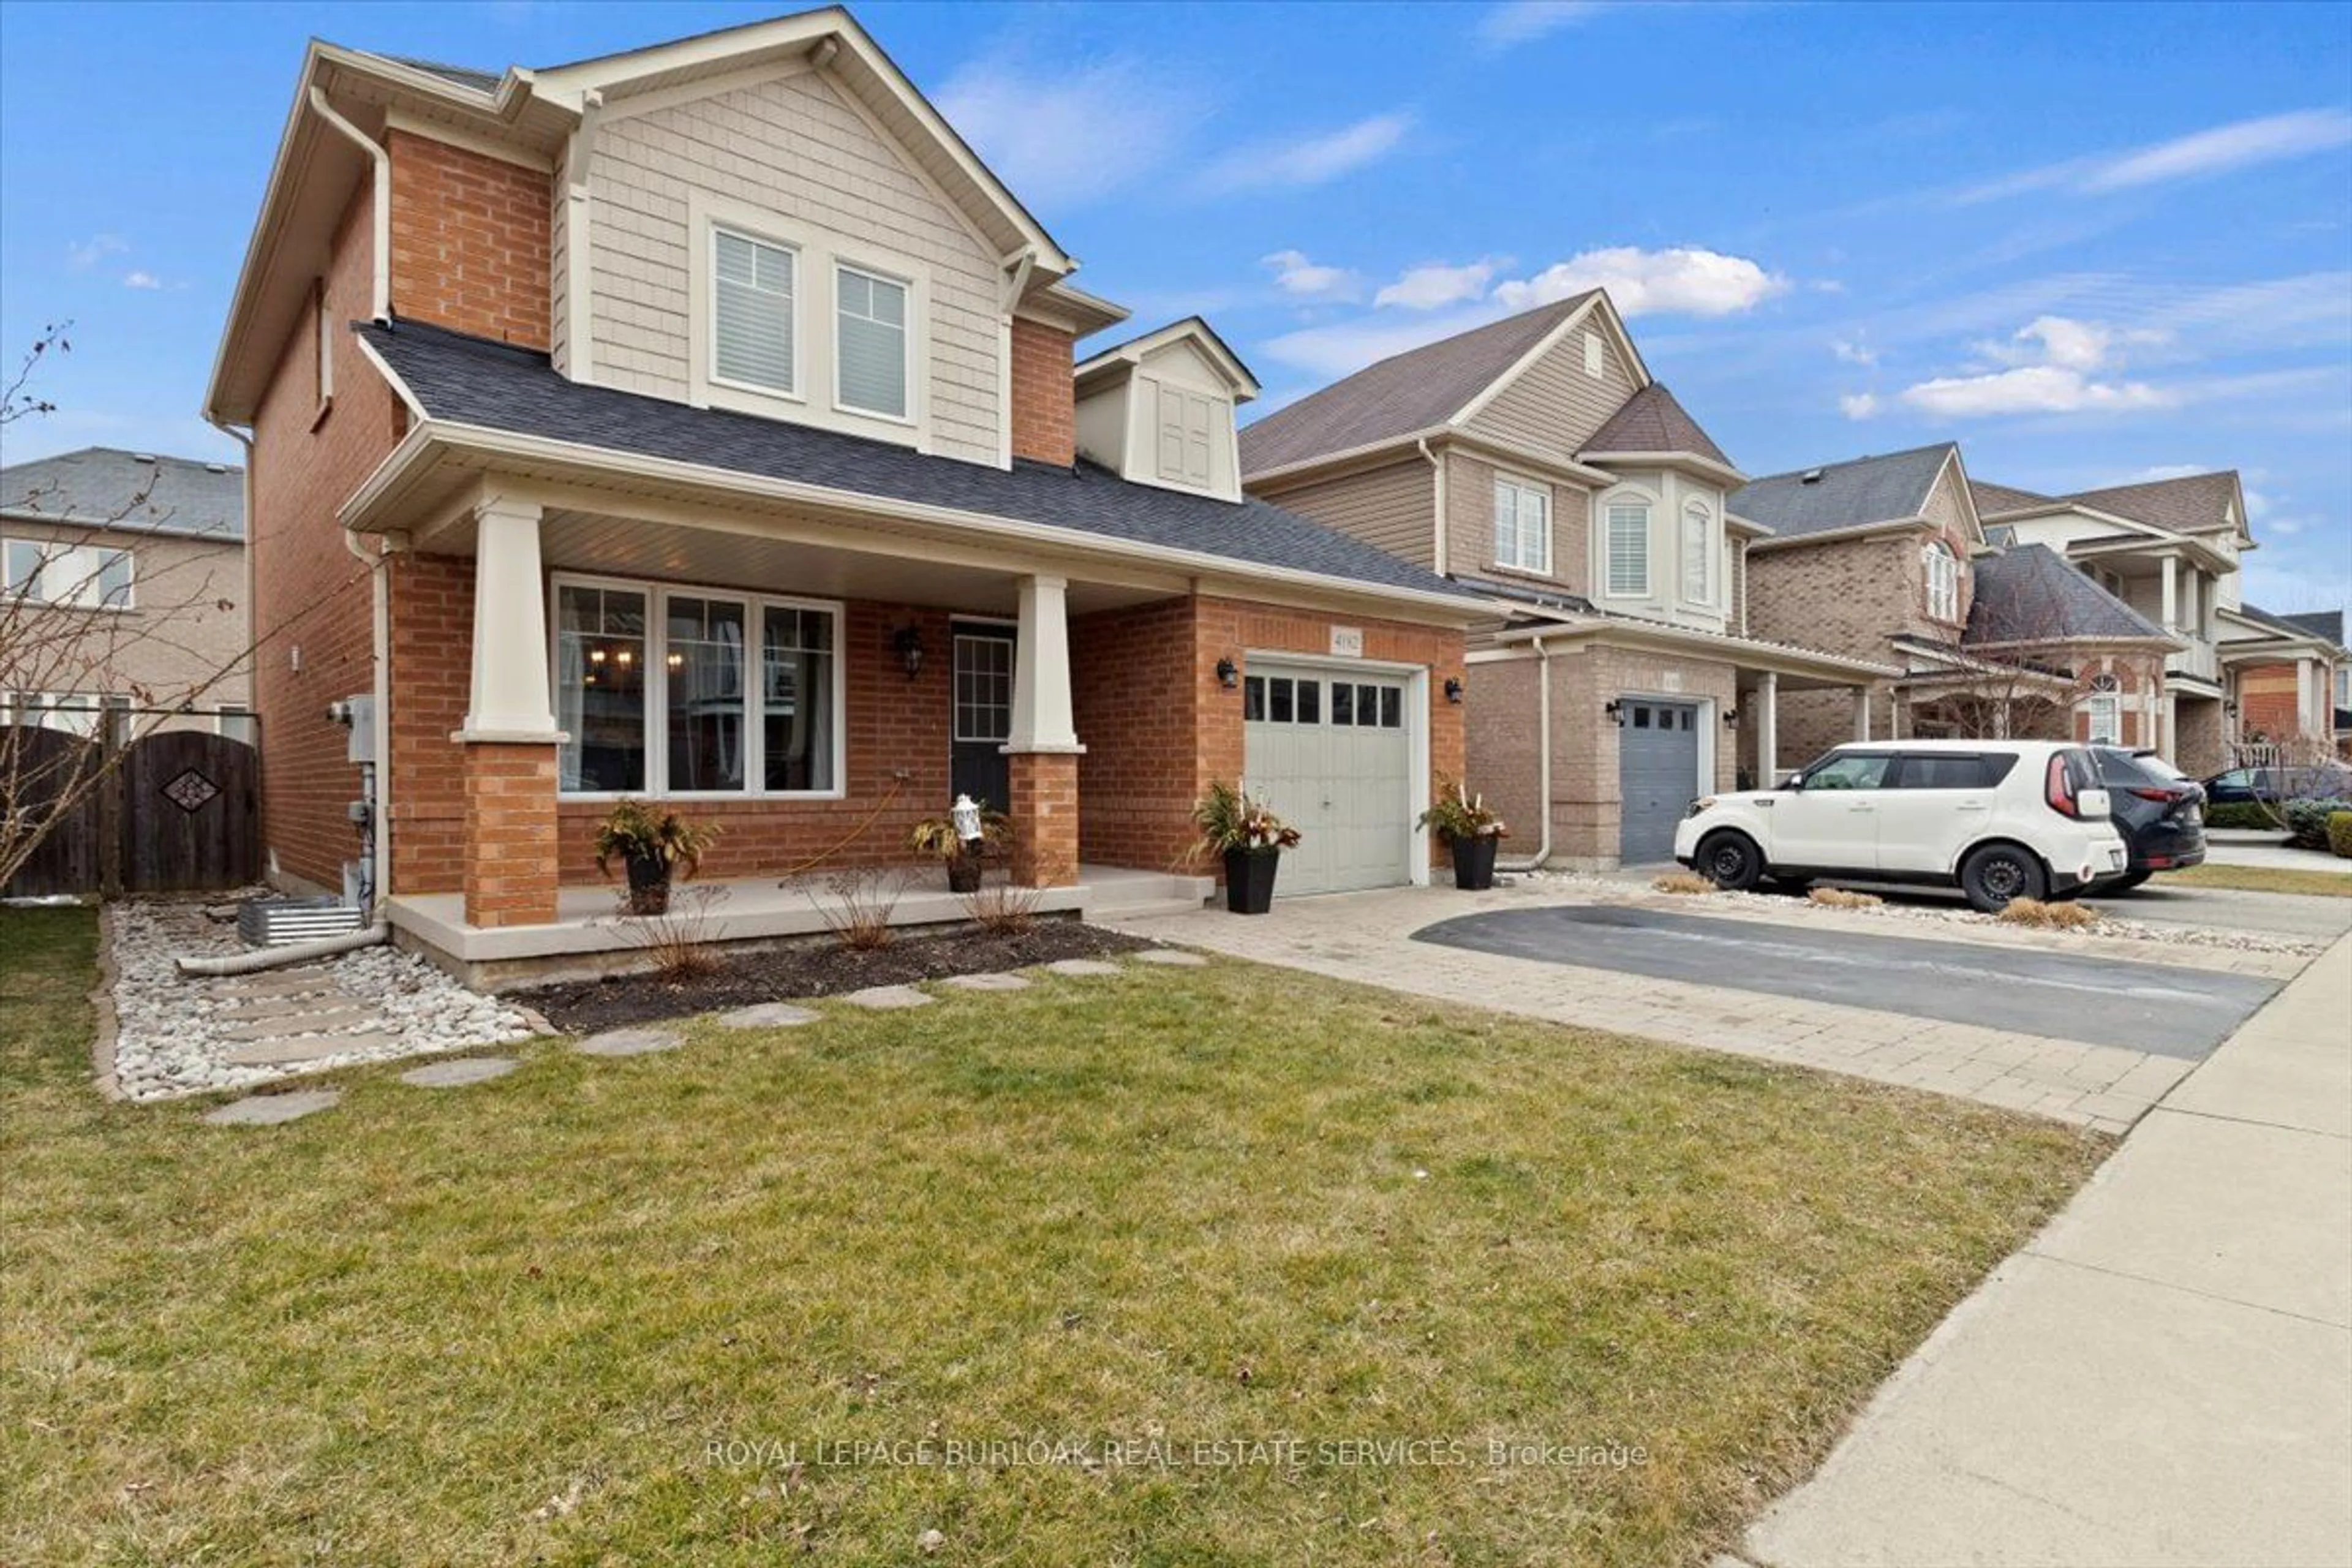 Home with brick exterior material for 4182 Prudham Ave, Burlington Ontario L7M 0C3